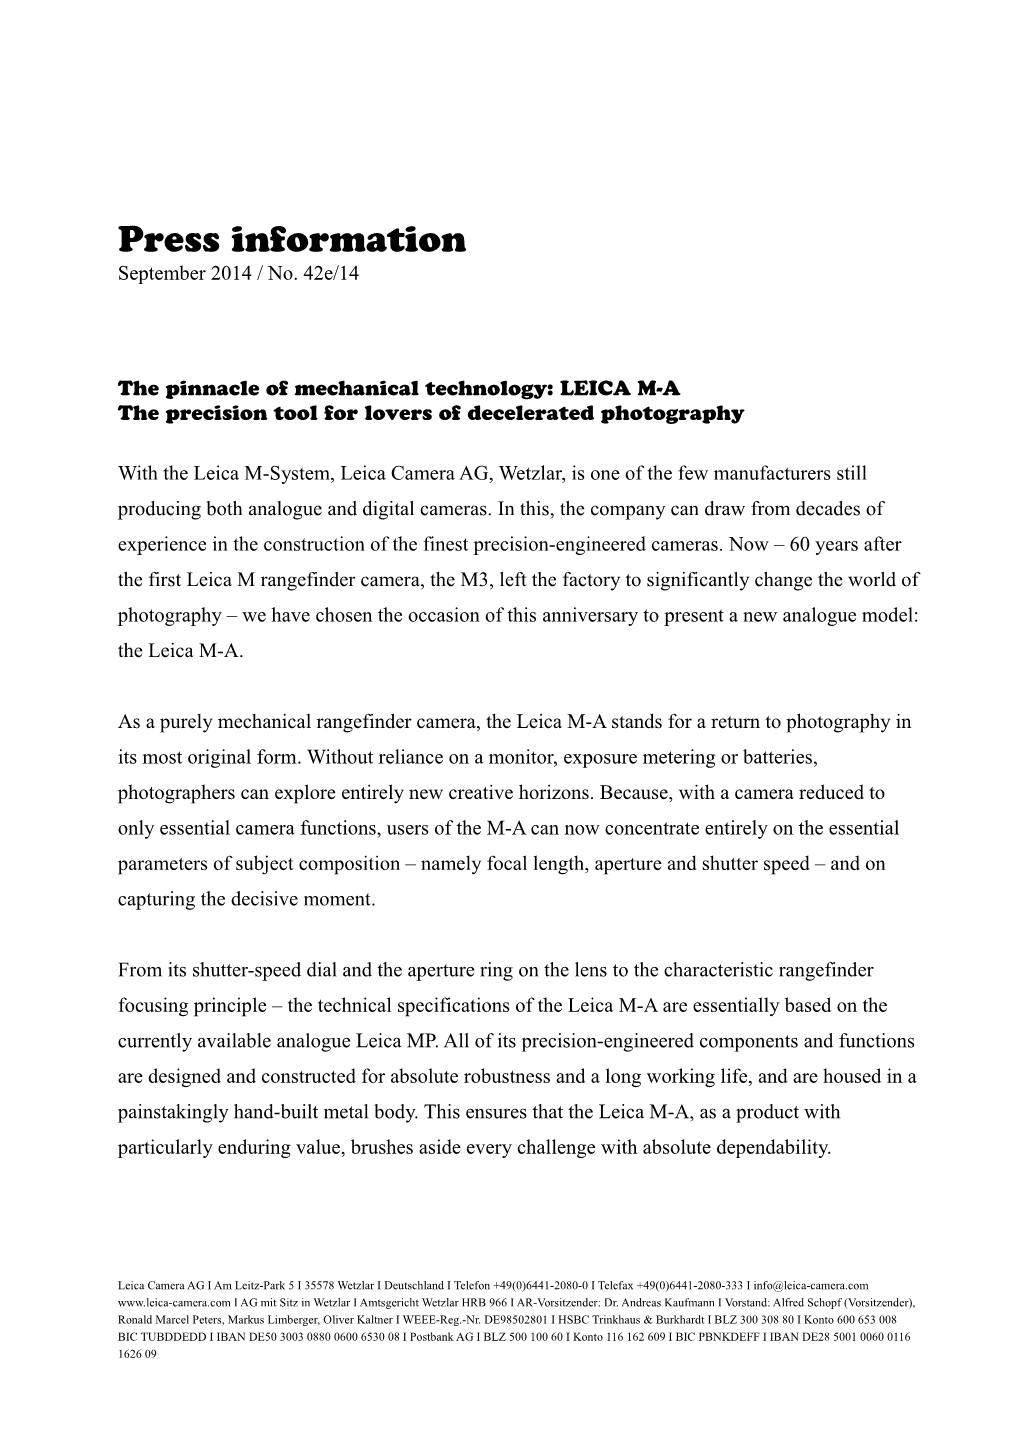 Press Information September 2014 / No